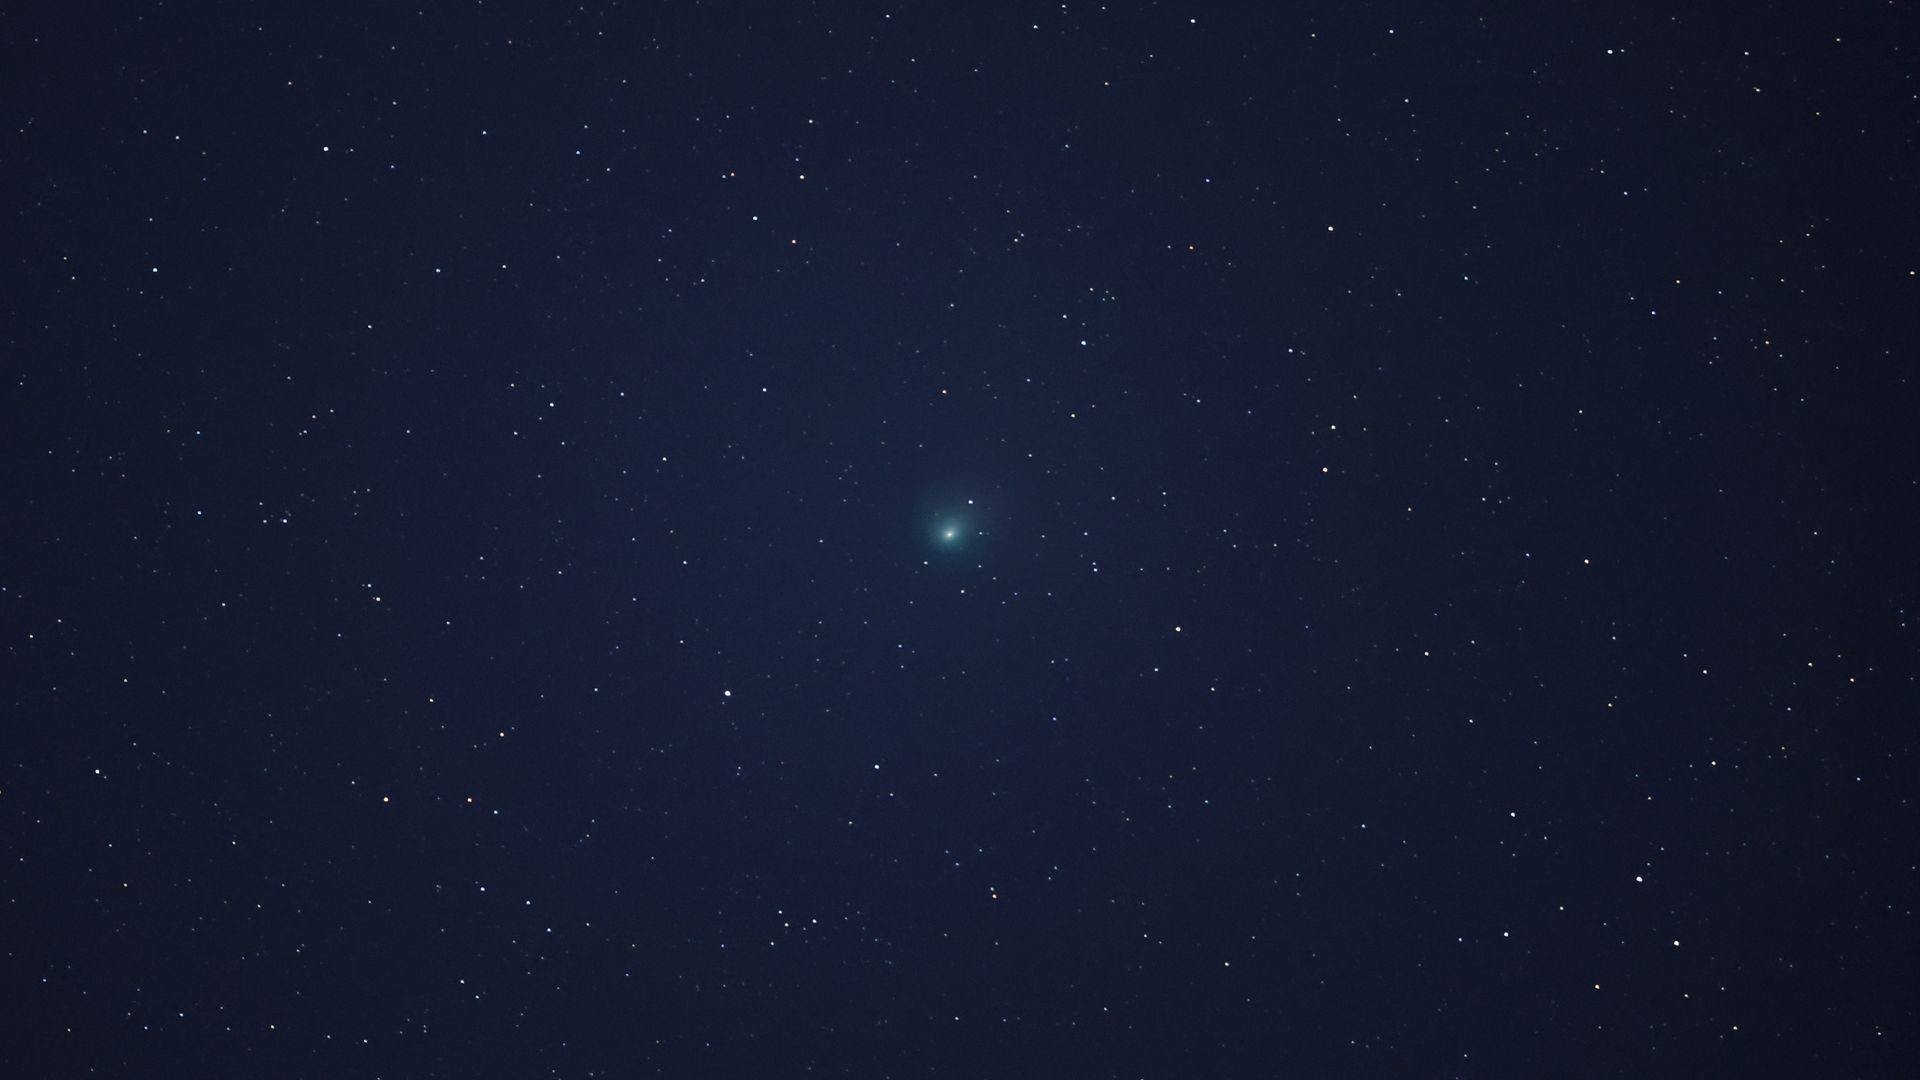 Green comet amongst stars